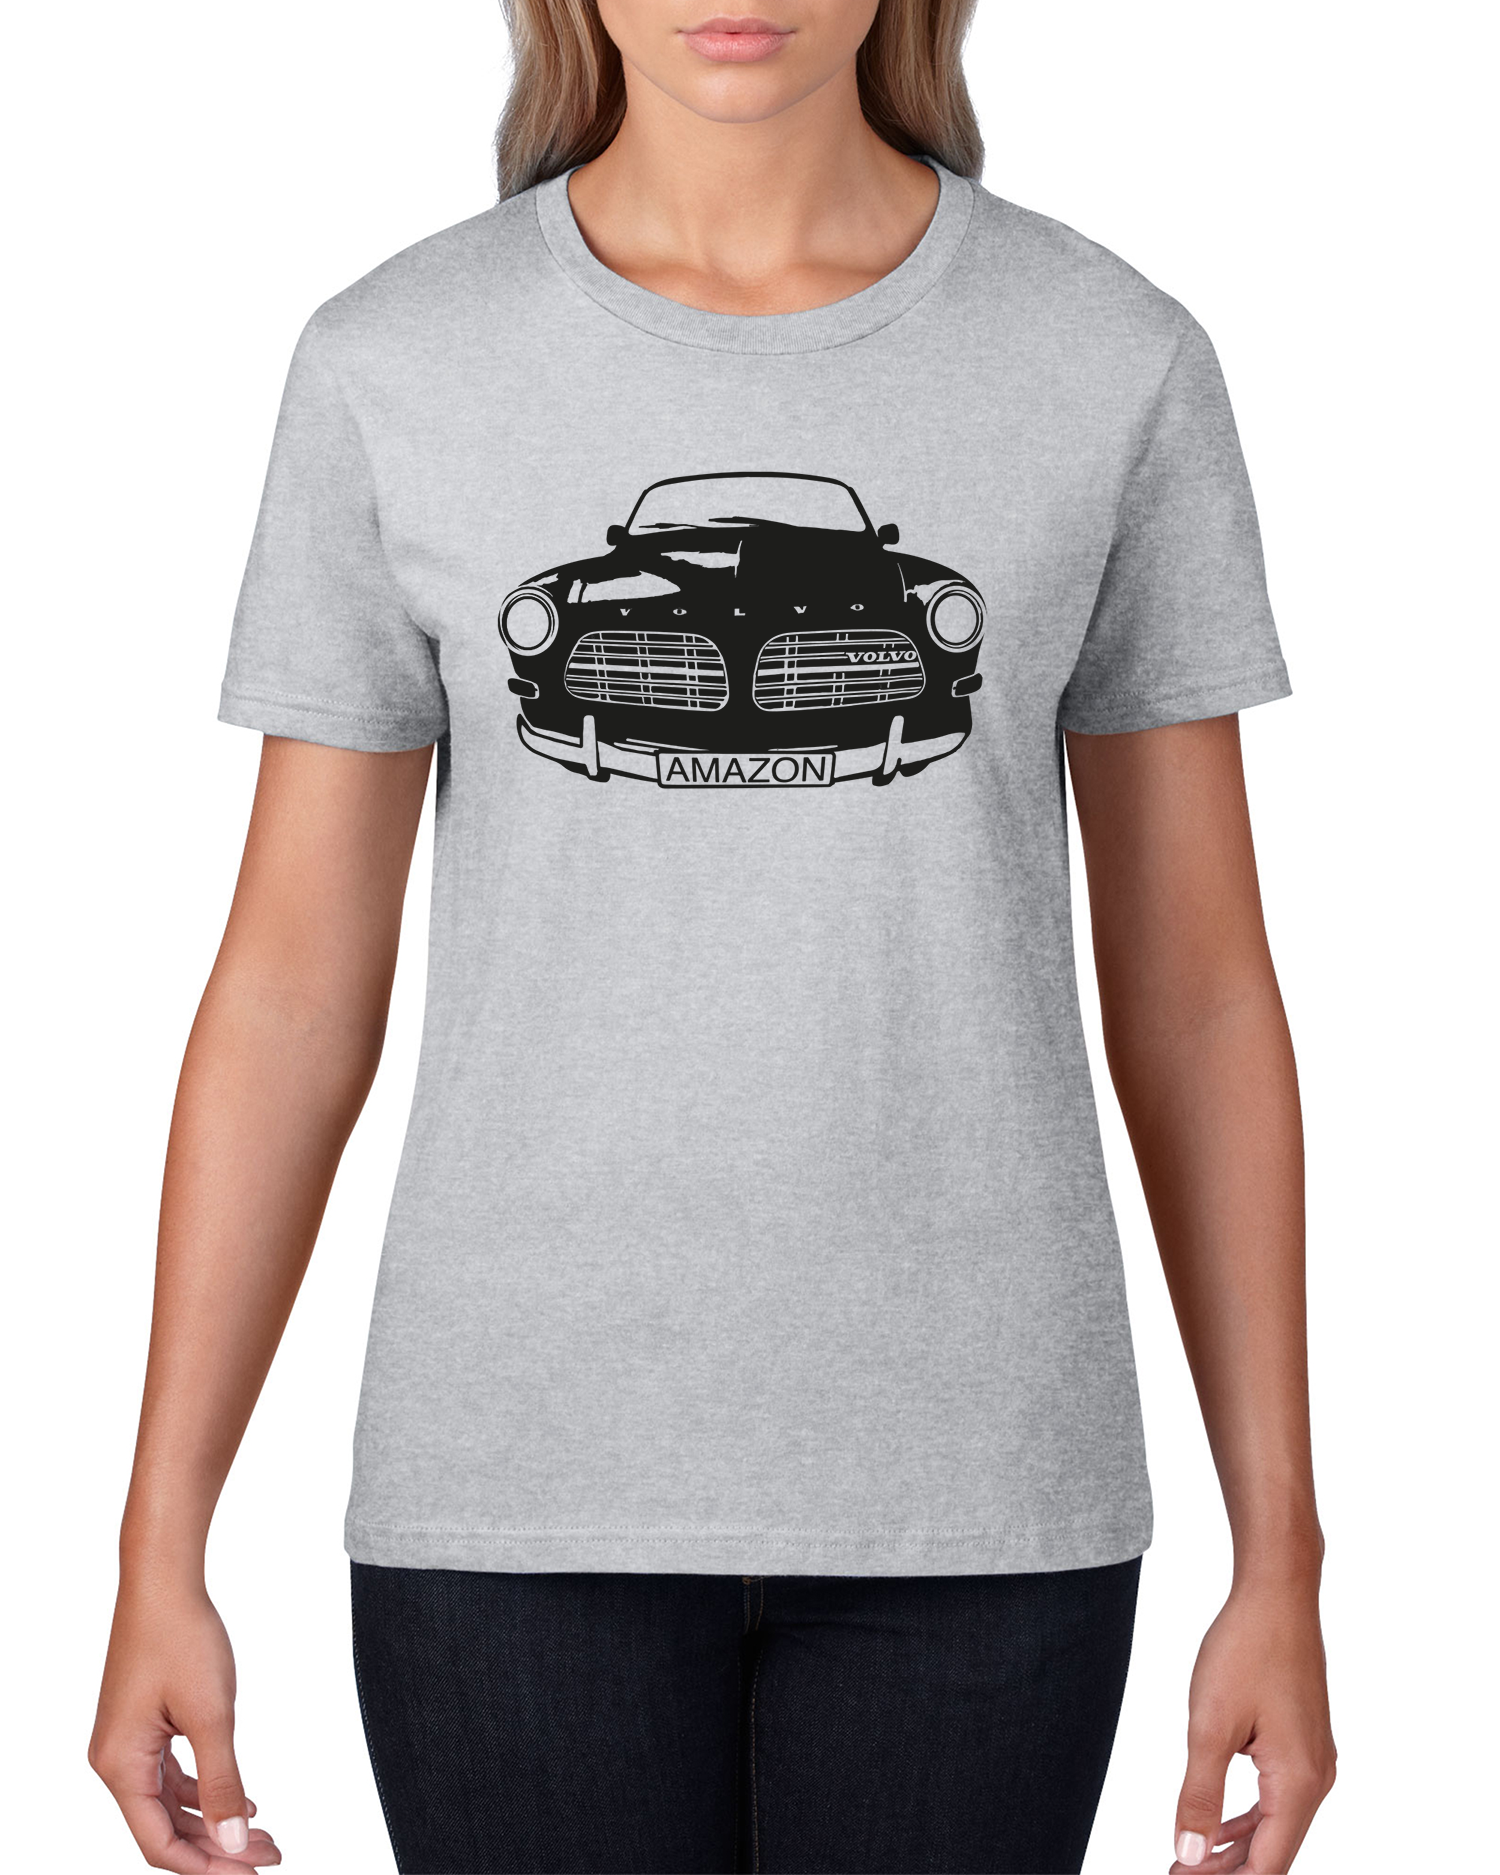 T-shirt dam: Volvo Amazon front - Retrotryck